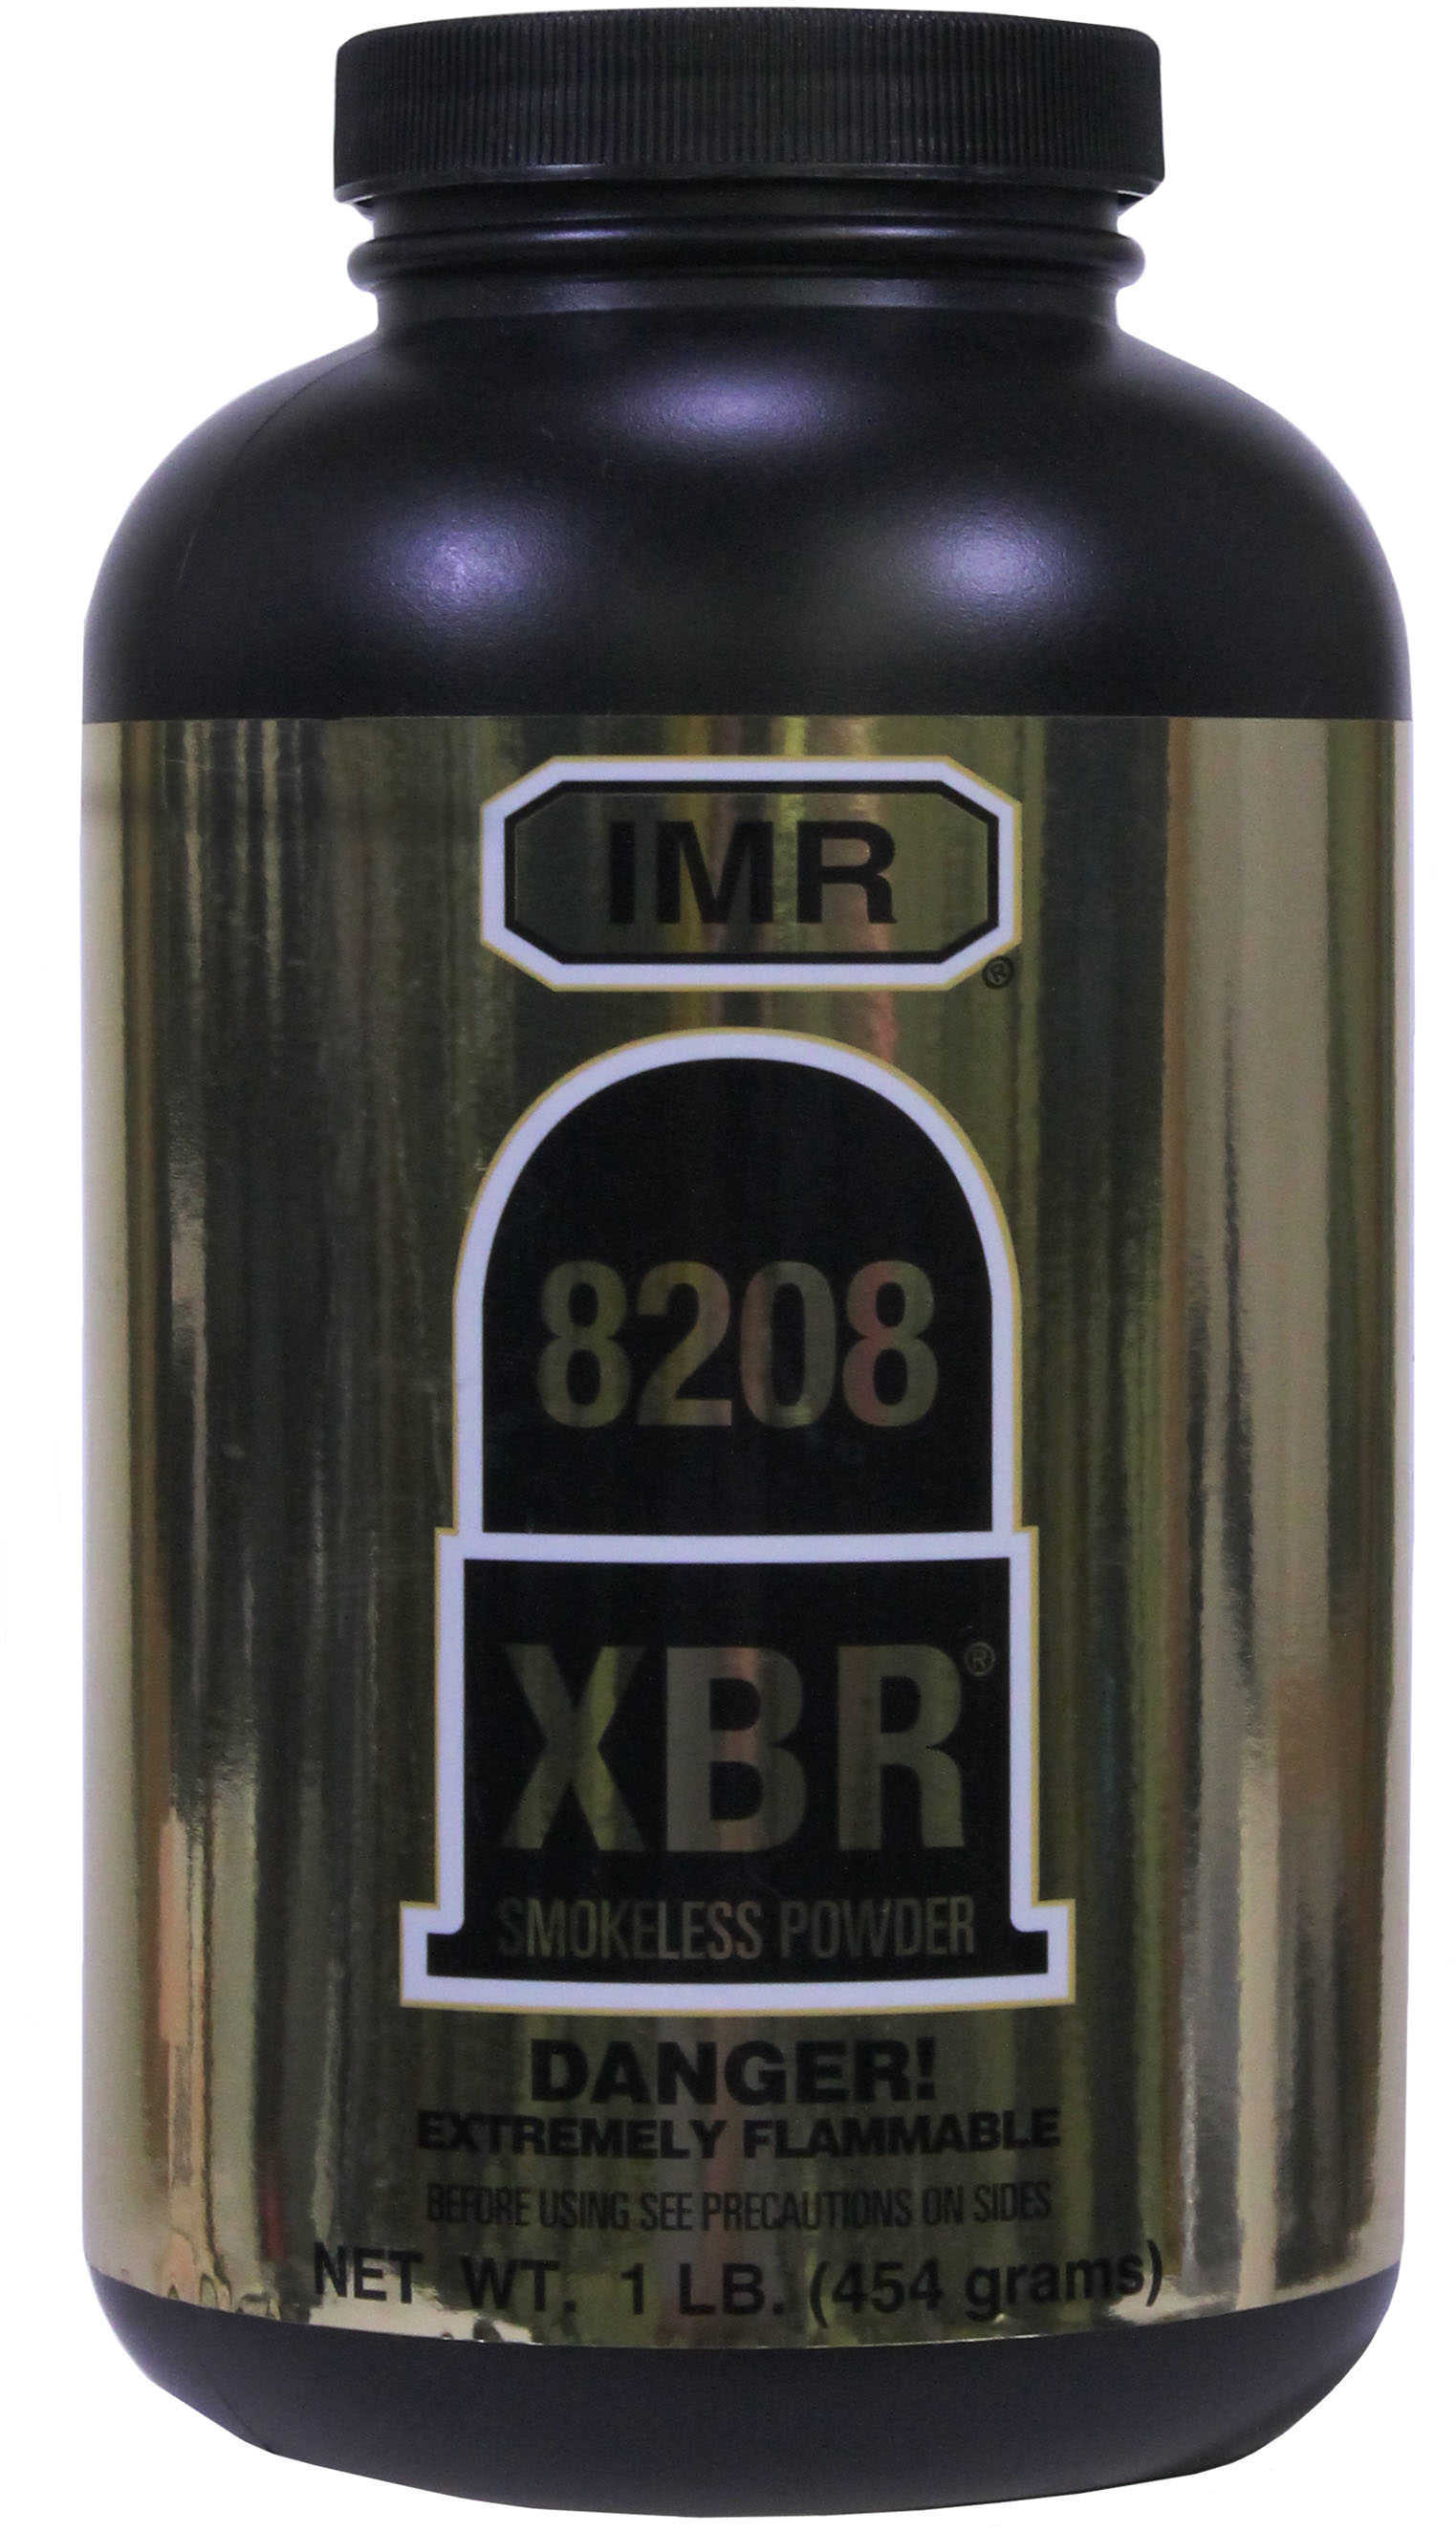 IMR 8208 XBR Smokeless Powder 1 Lb